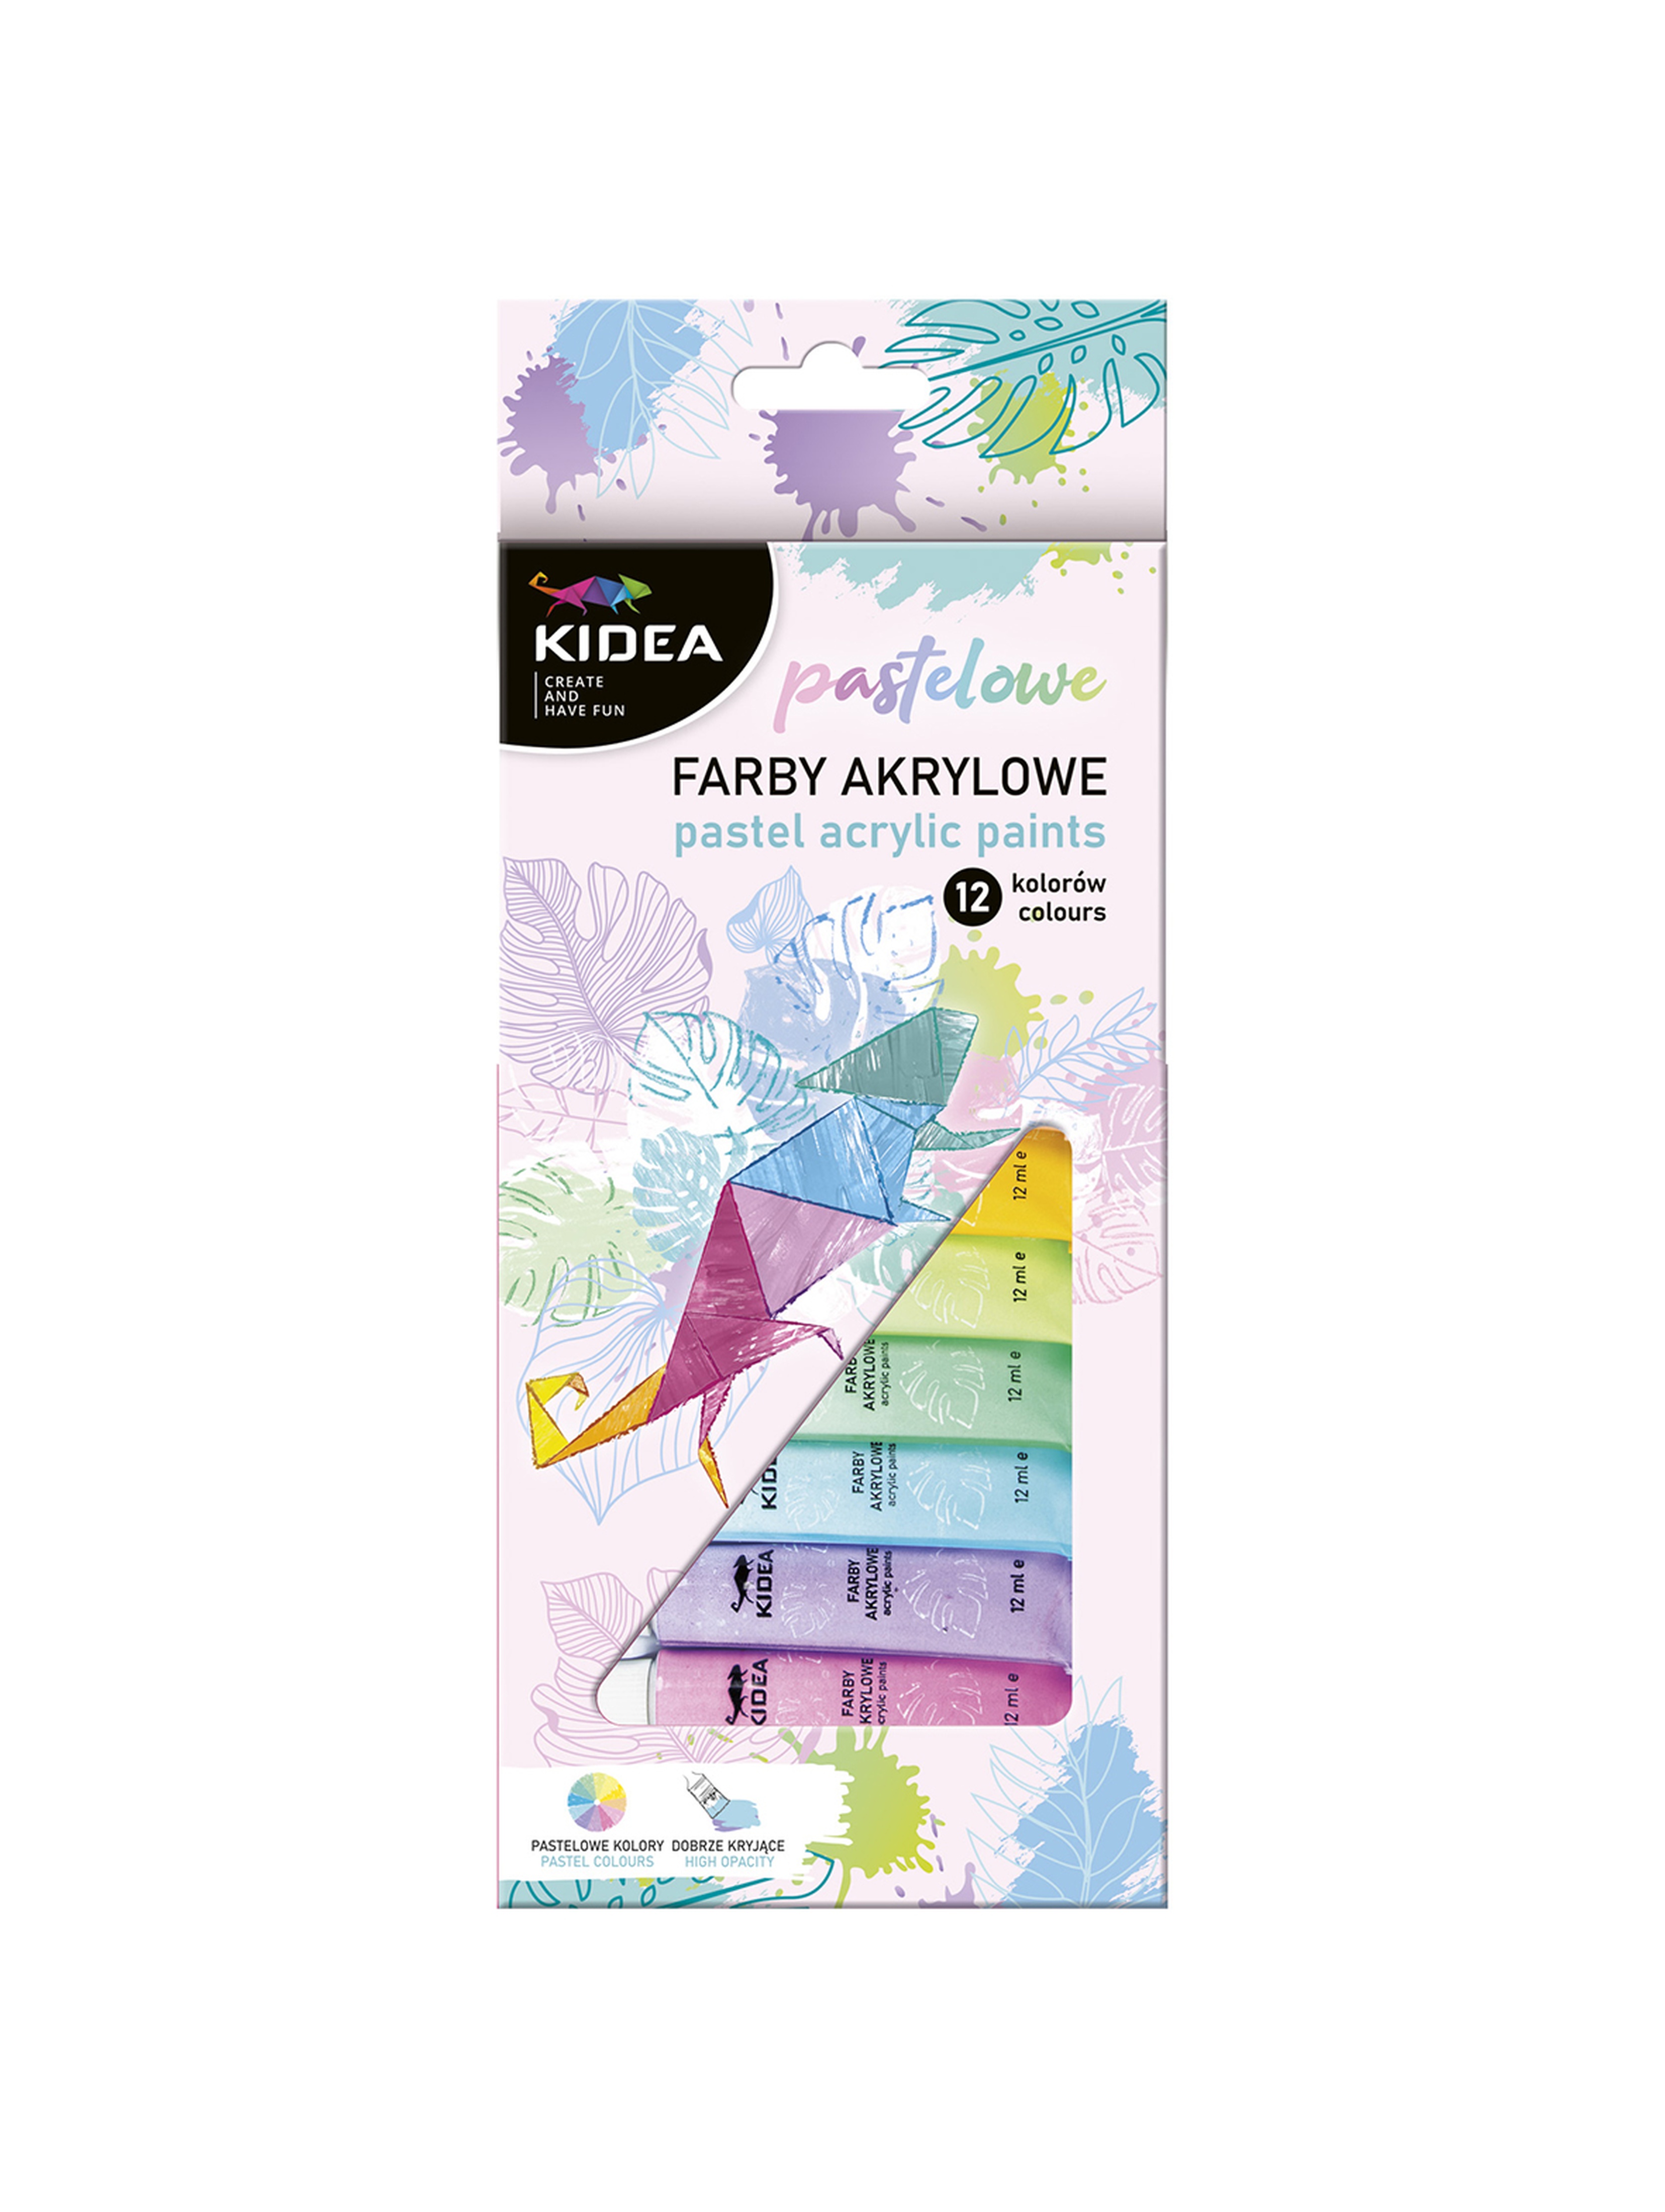 Farby akrylowe pastelowe 12 x 12 ml Kidea